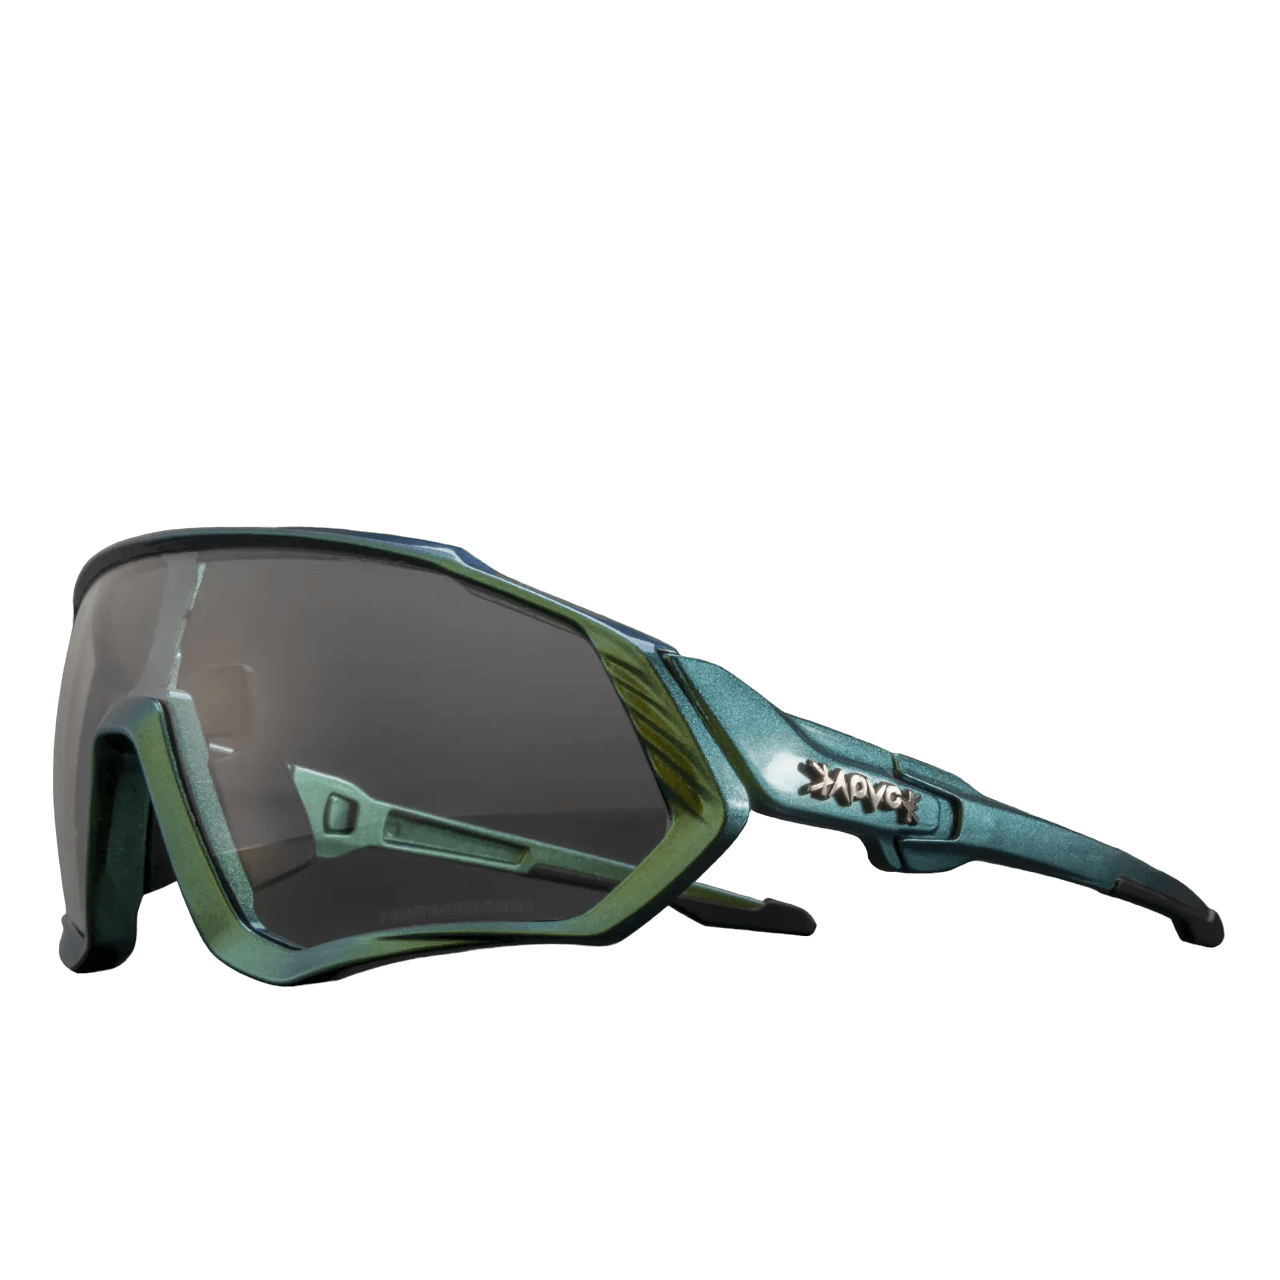 Kenzie Sport Cycling Photochromic Sunglasses - Rad Sunnies